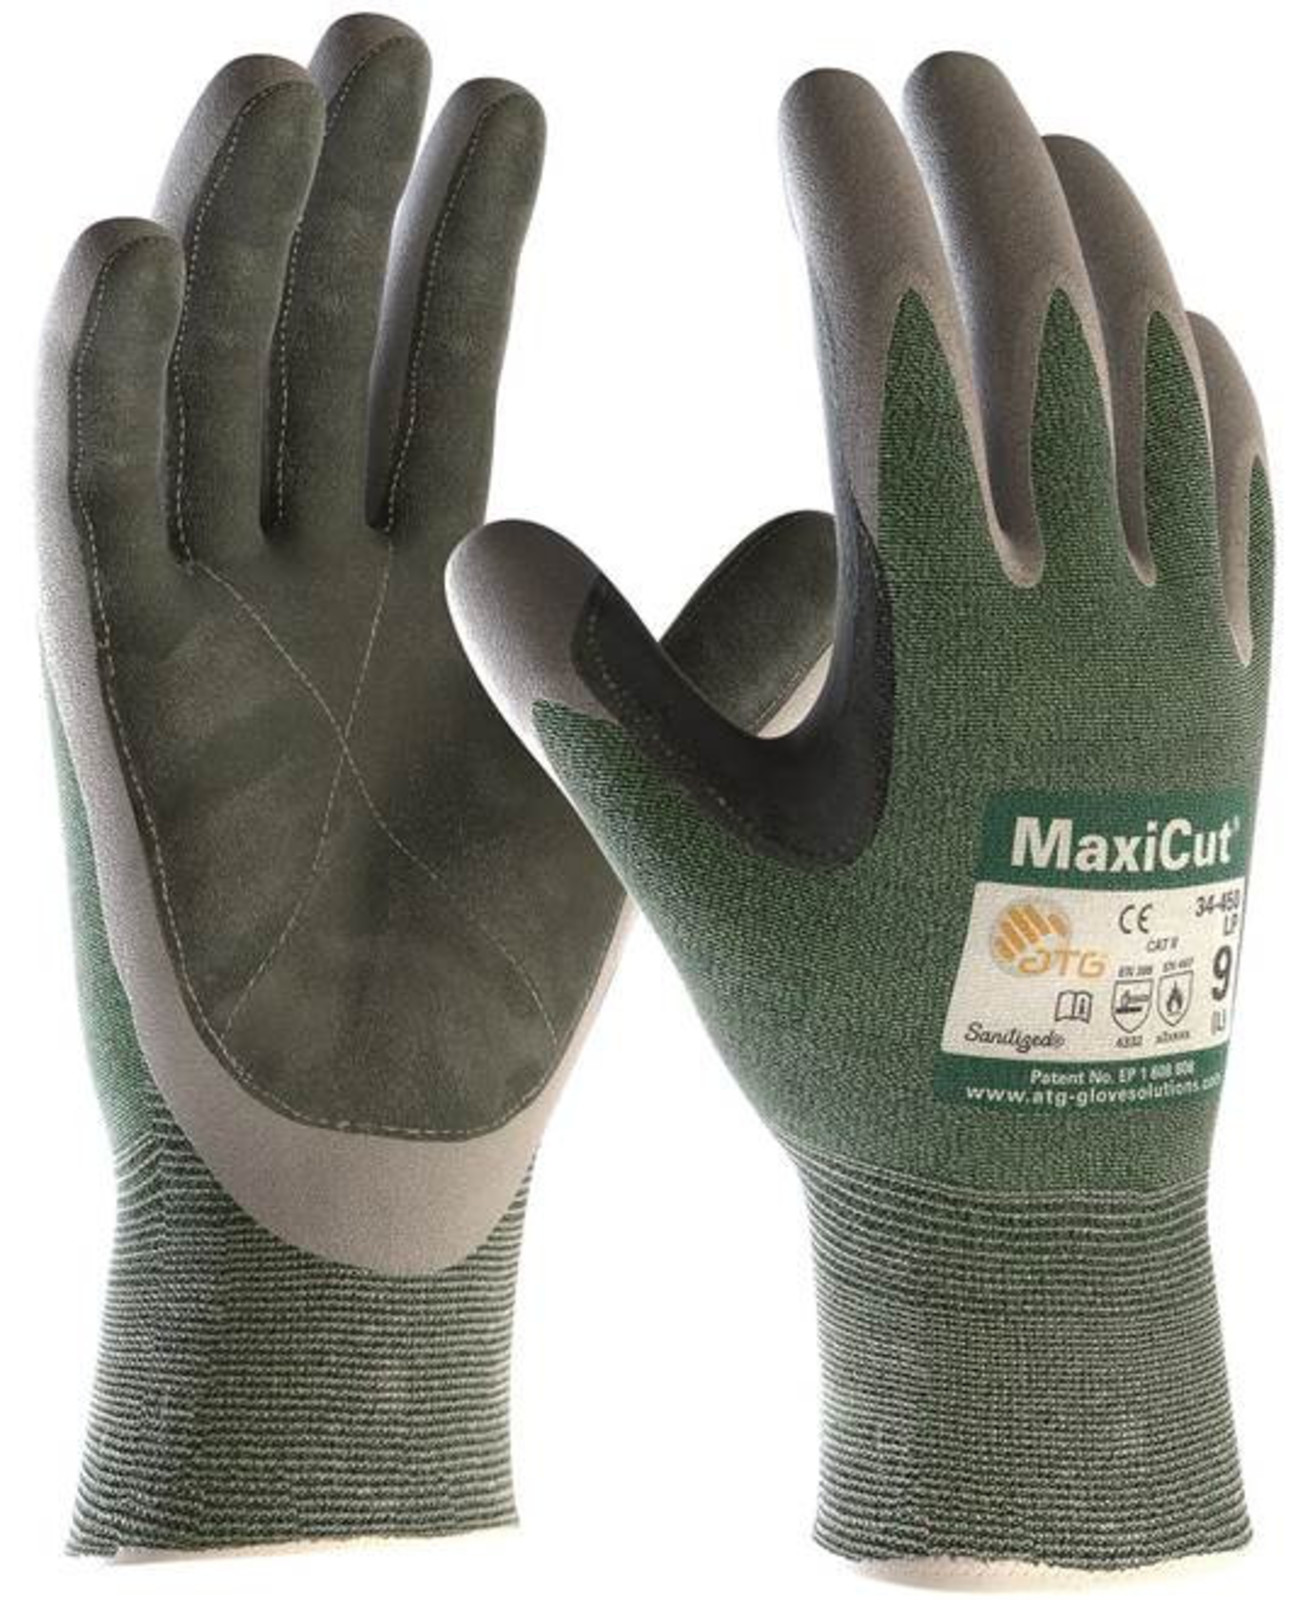 Protiporézne rukavice ATG MaxiCut 34-450 LP - veľkosť: 10/XL, farba: zelená